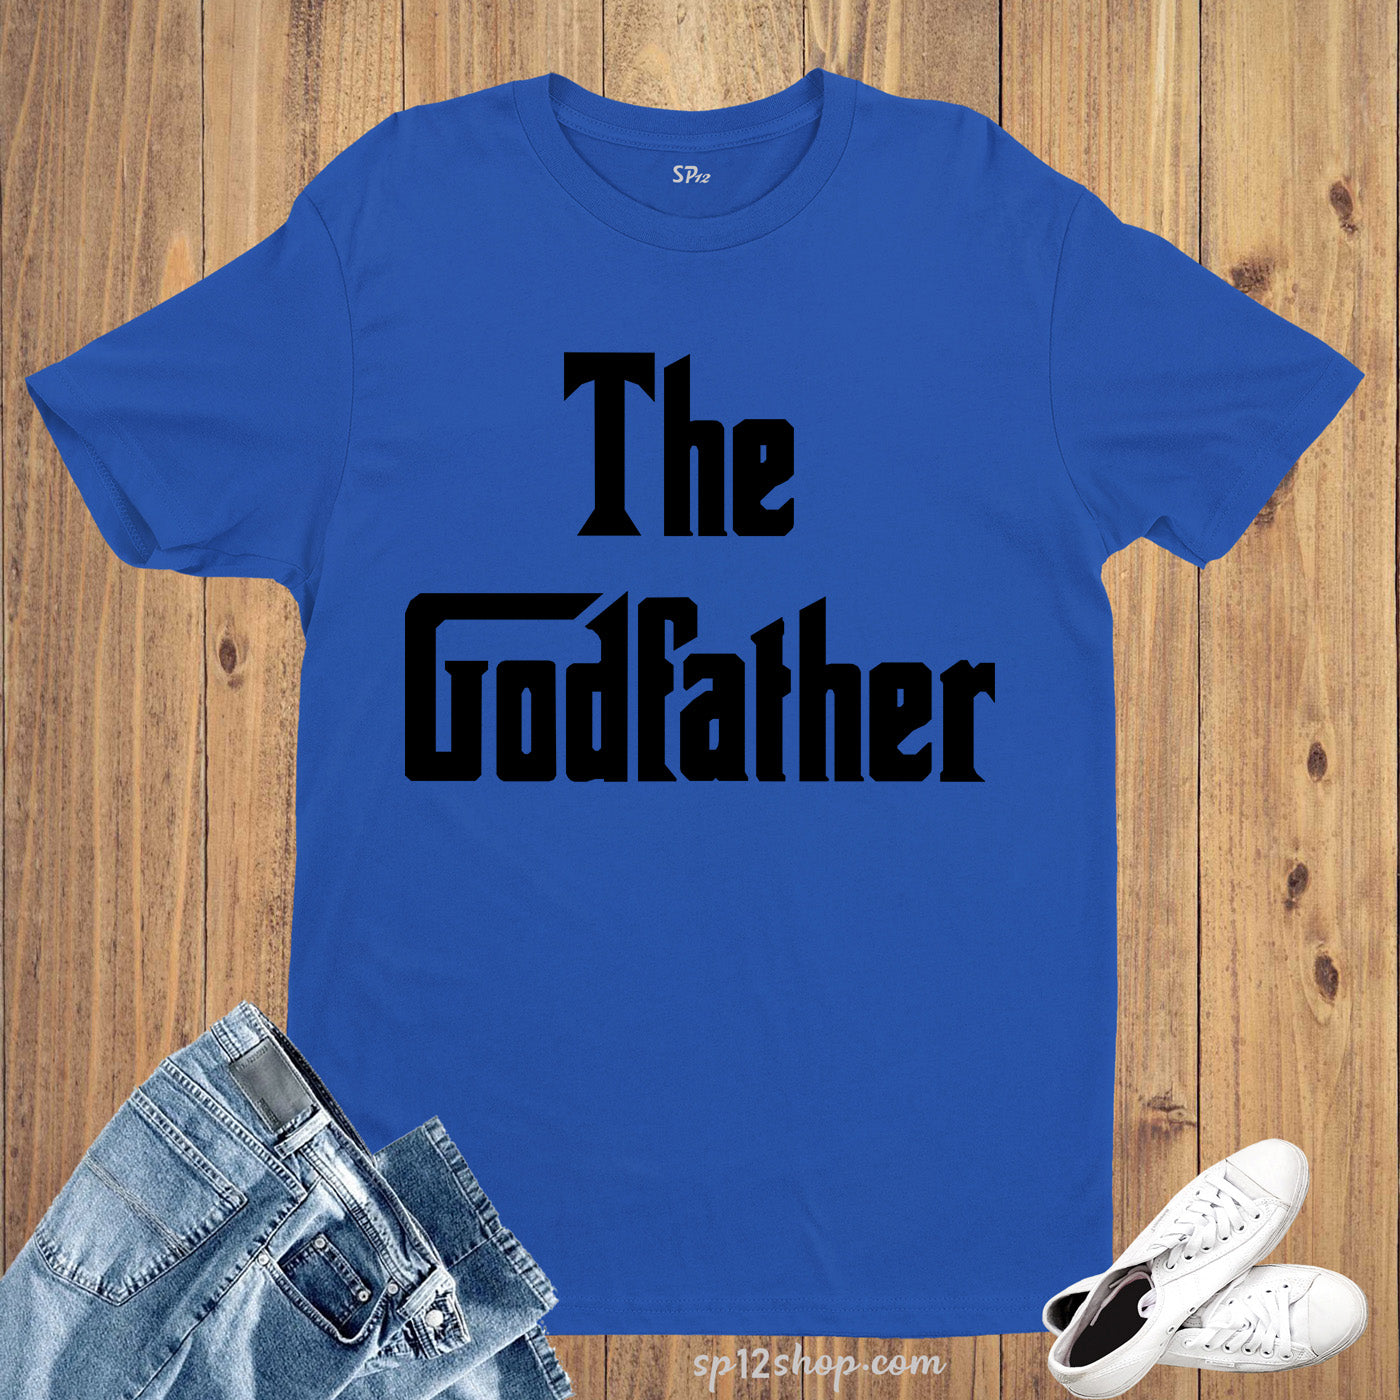 Godfather T Shirt